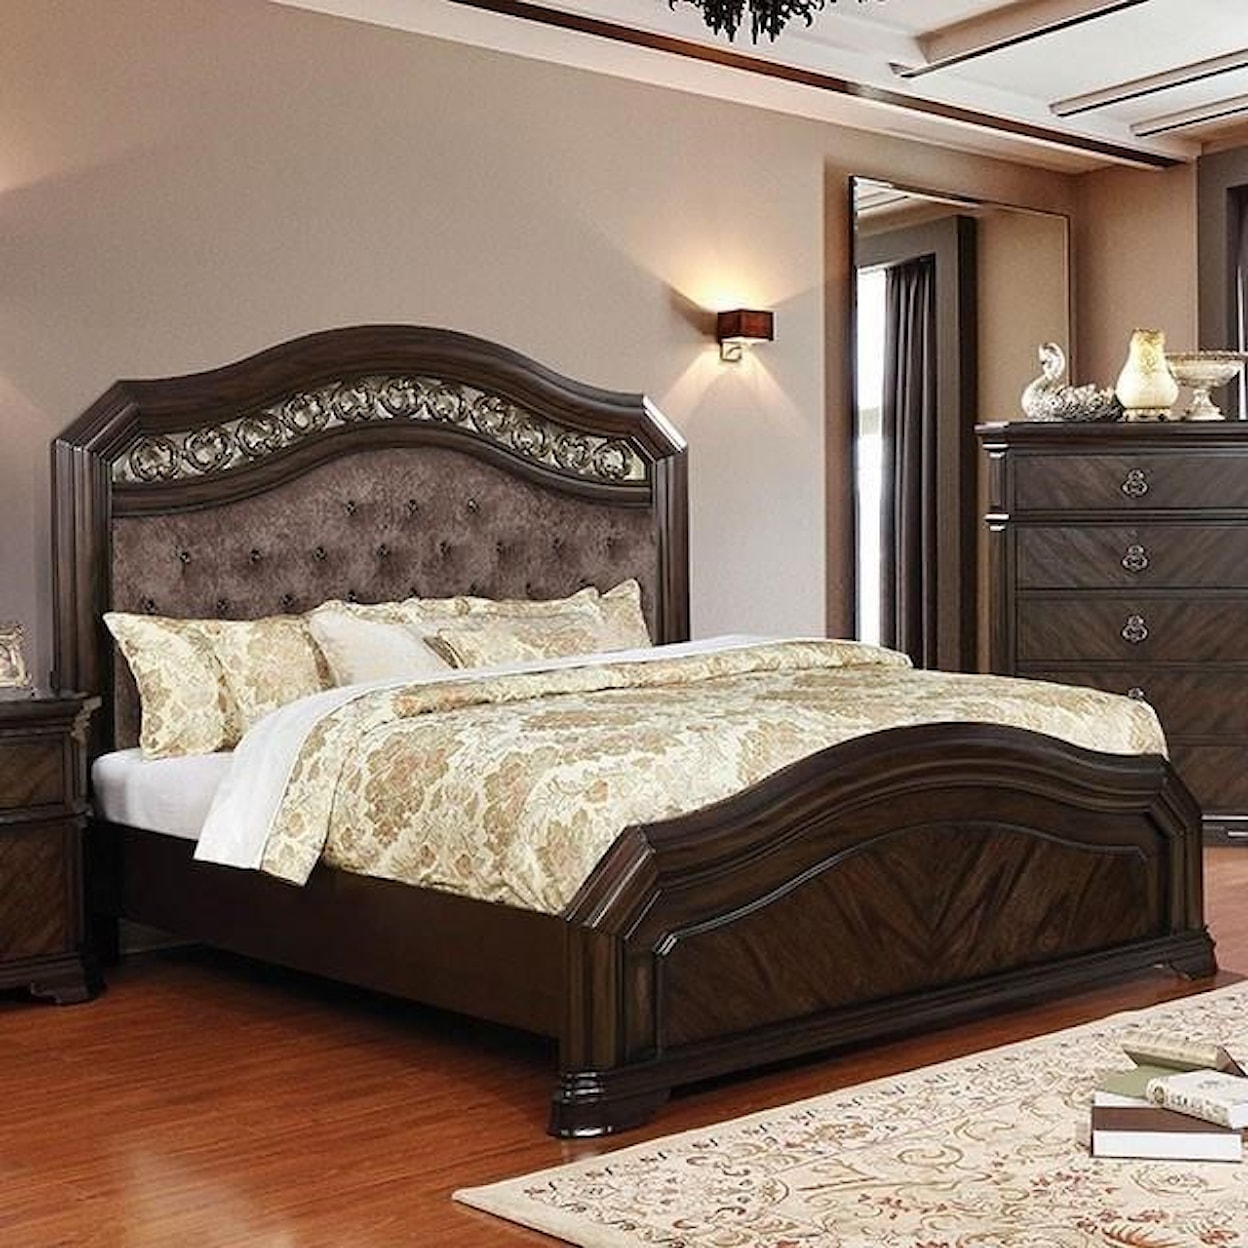 Furniture of America Calliope California King Bed